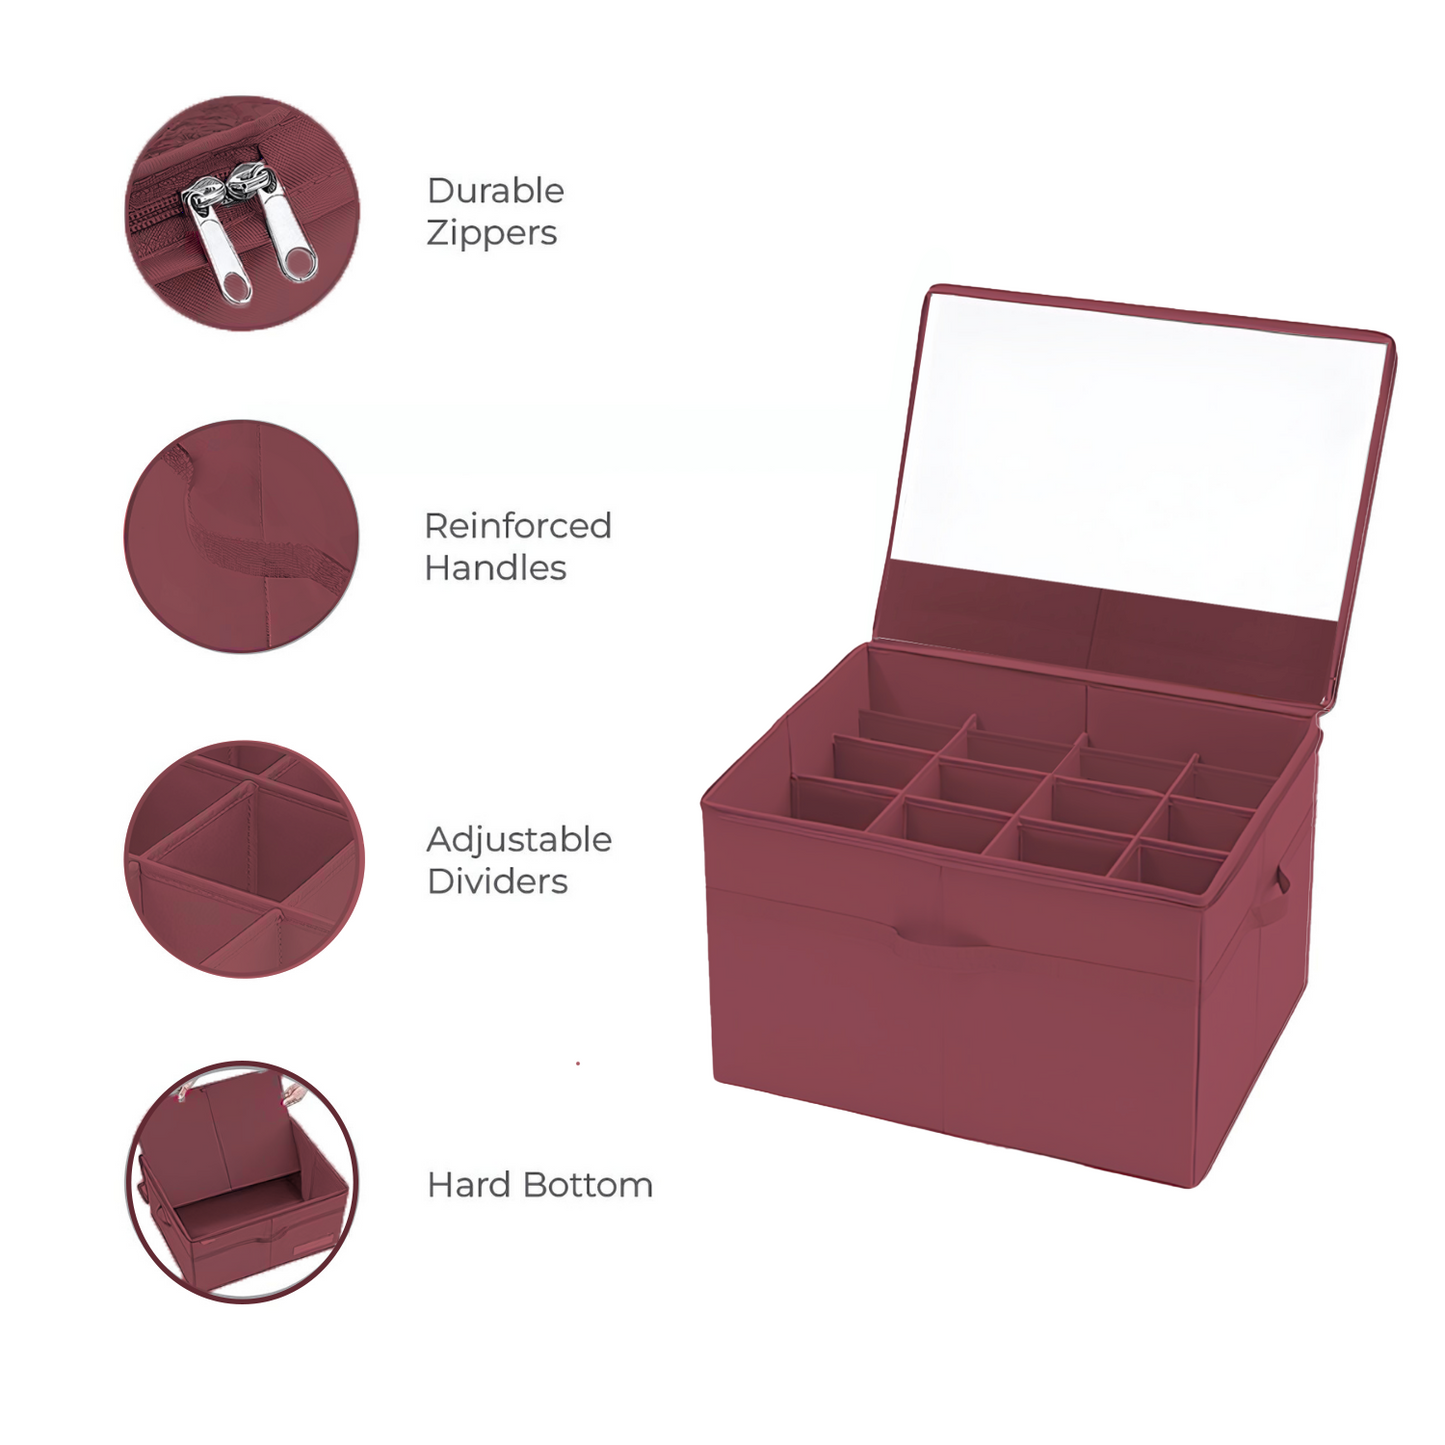 Qoolish 16-Pair Shoe Storage Box - Transparent, Foldable, Space-Saving Shoe Cubby with Reinforced Base